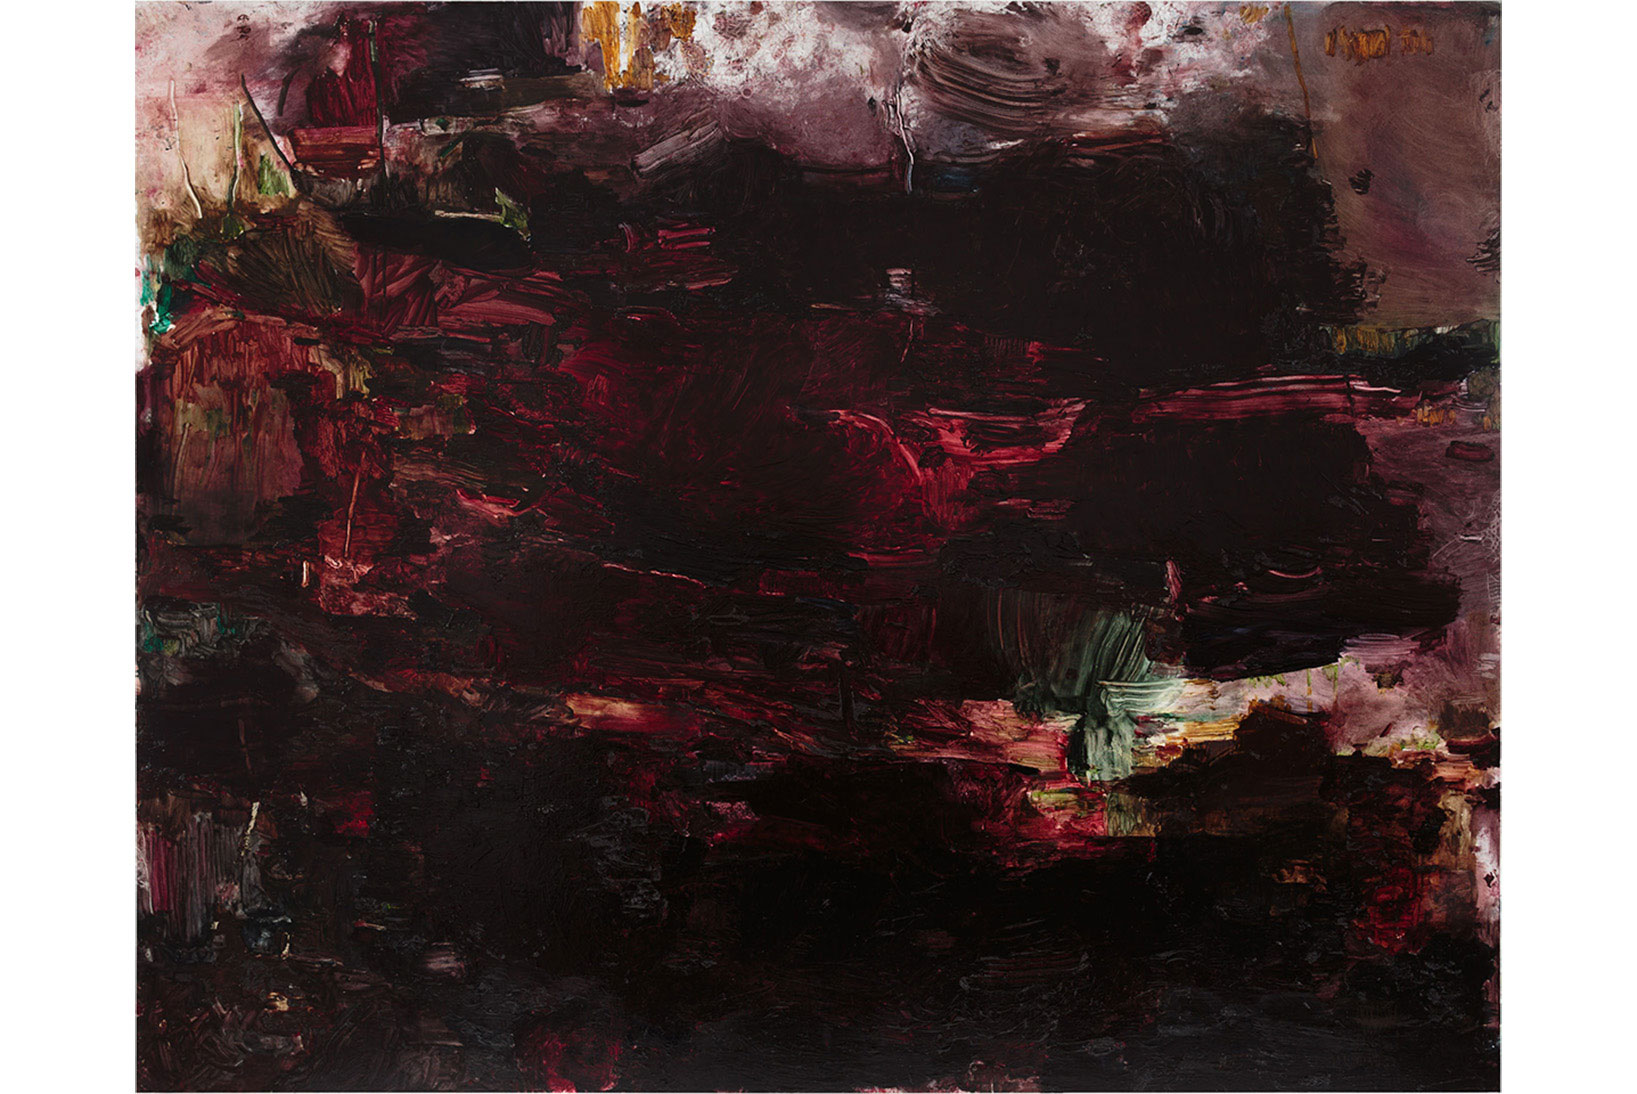 Julia Selin, Untitled, 2014, oil on canvas, 196 x 245 cm